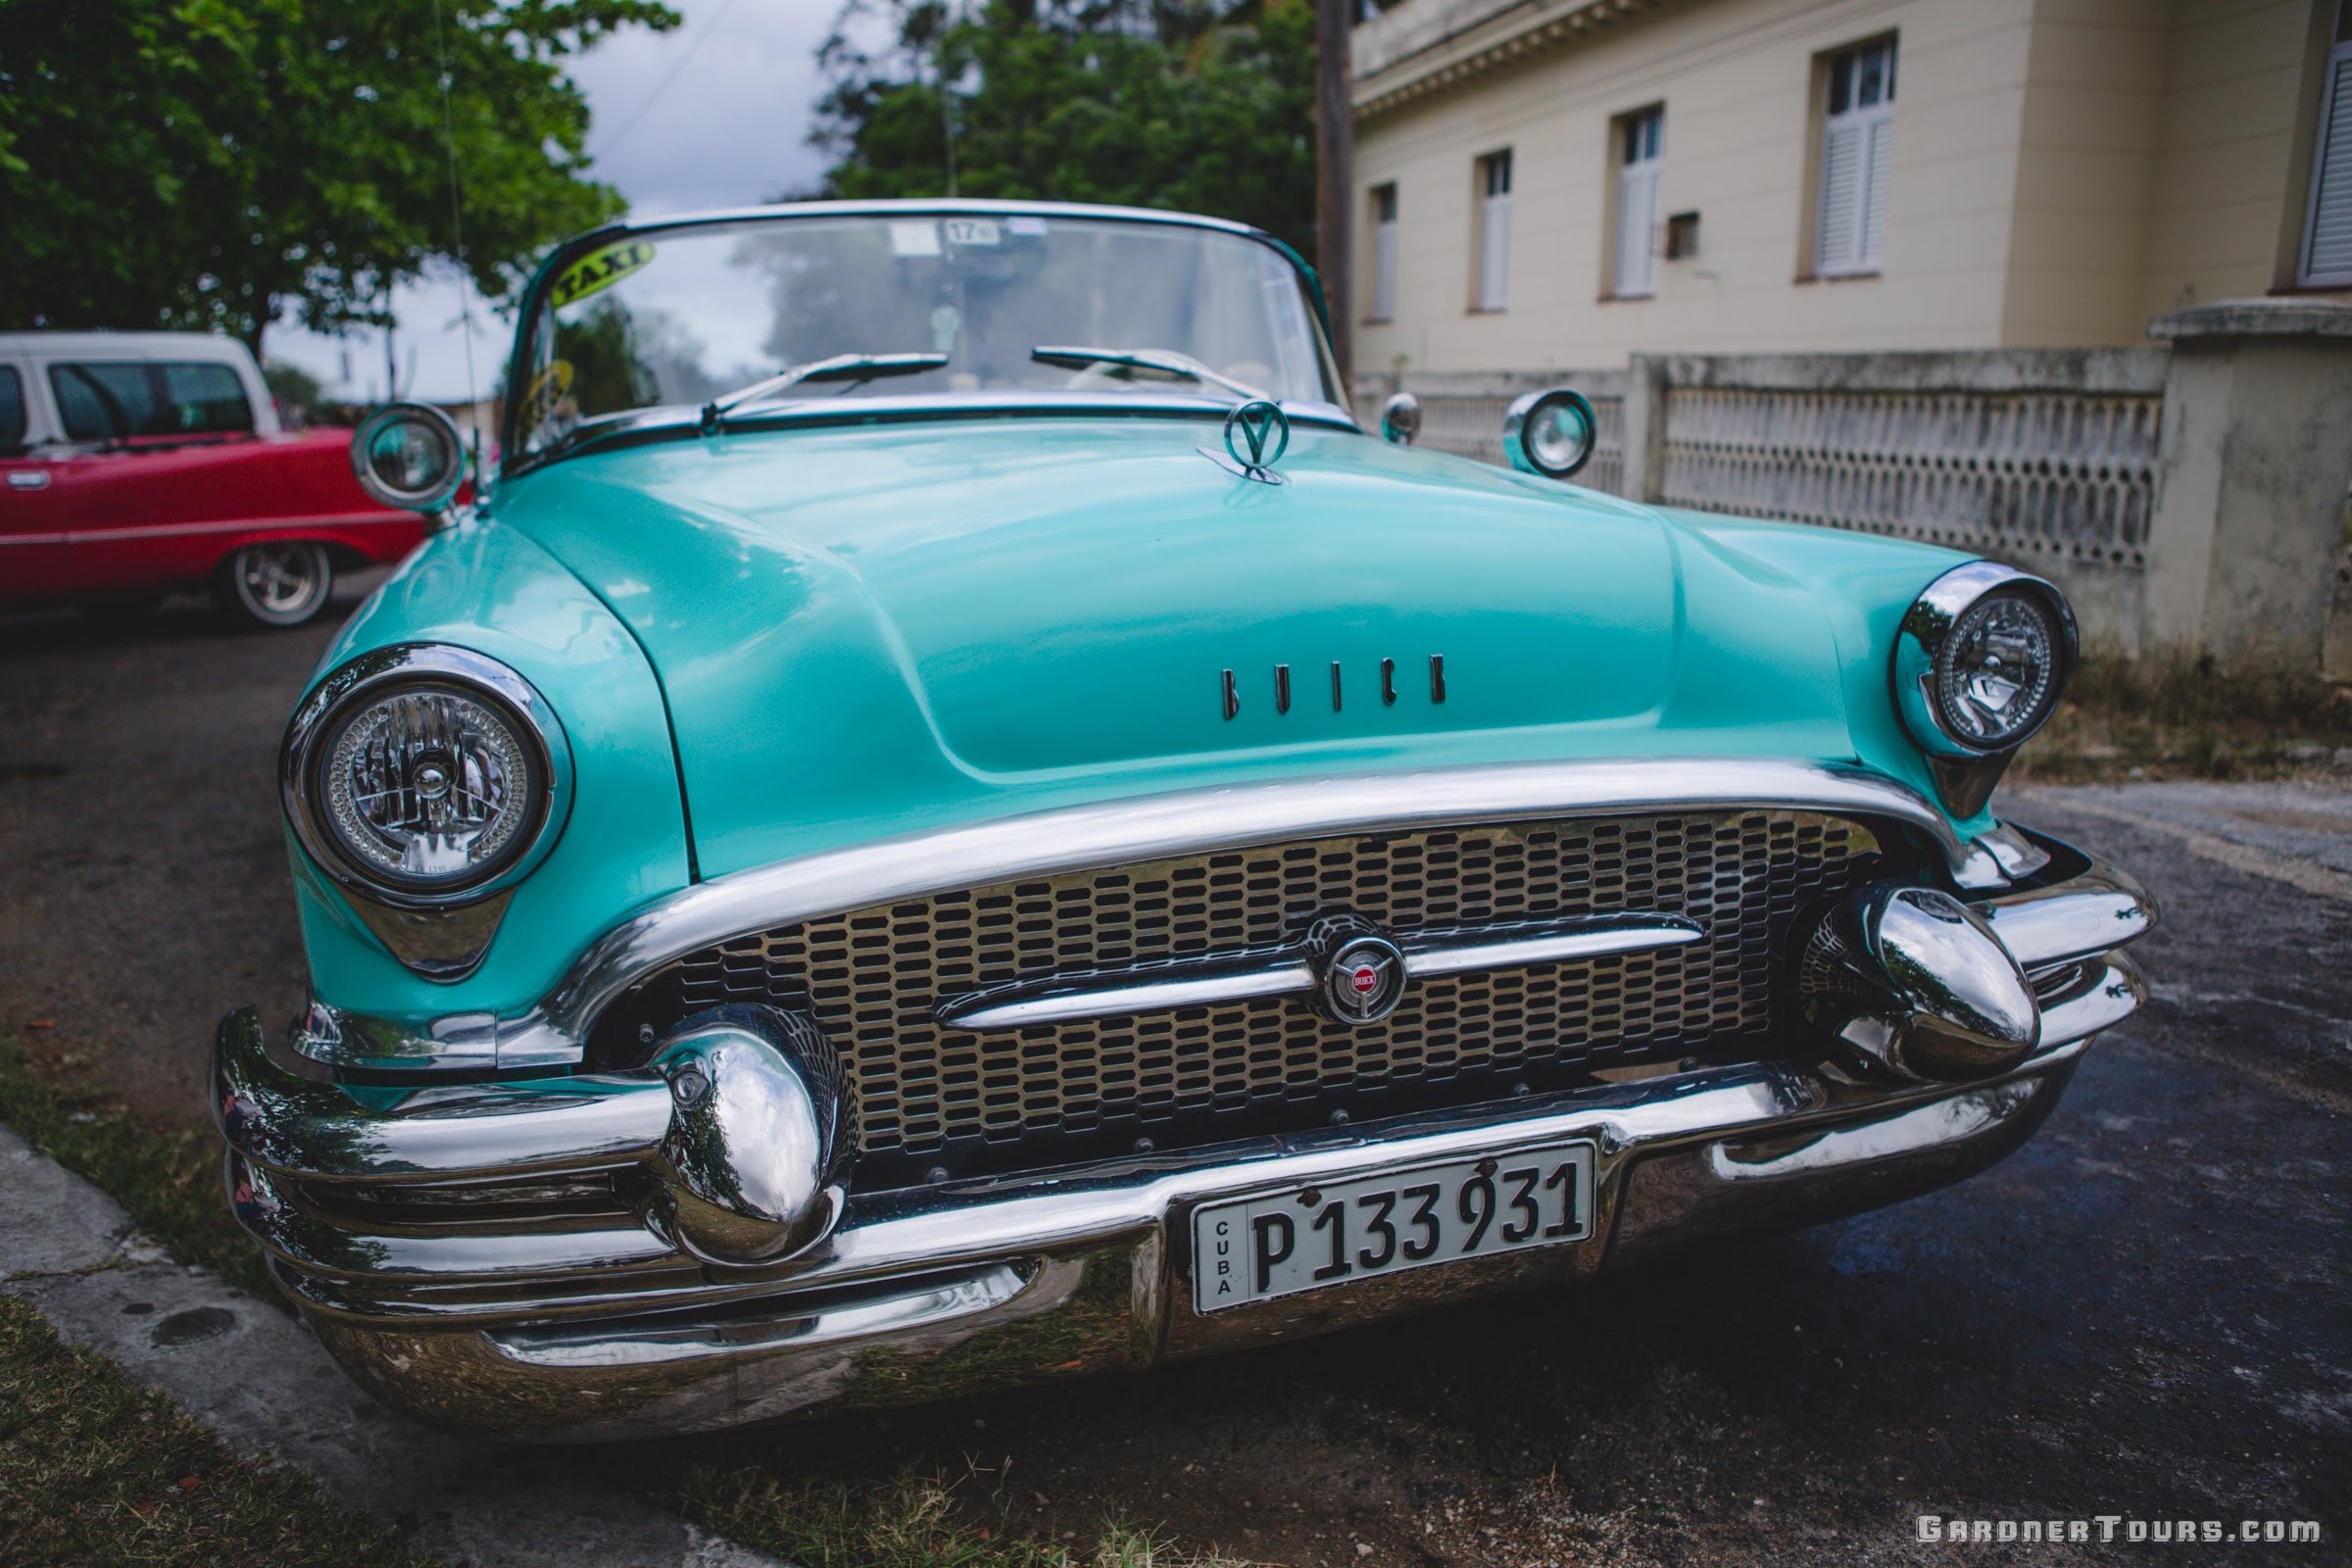 Turquoise Buick Classic Car in Havana Cuba